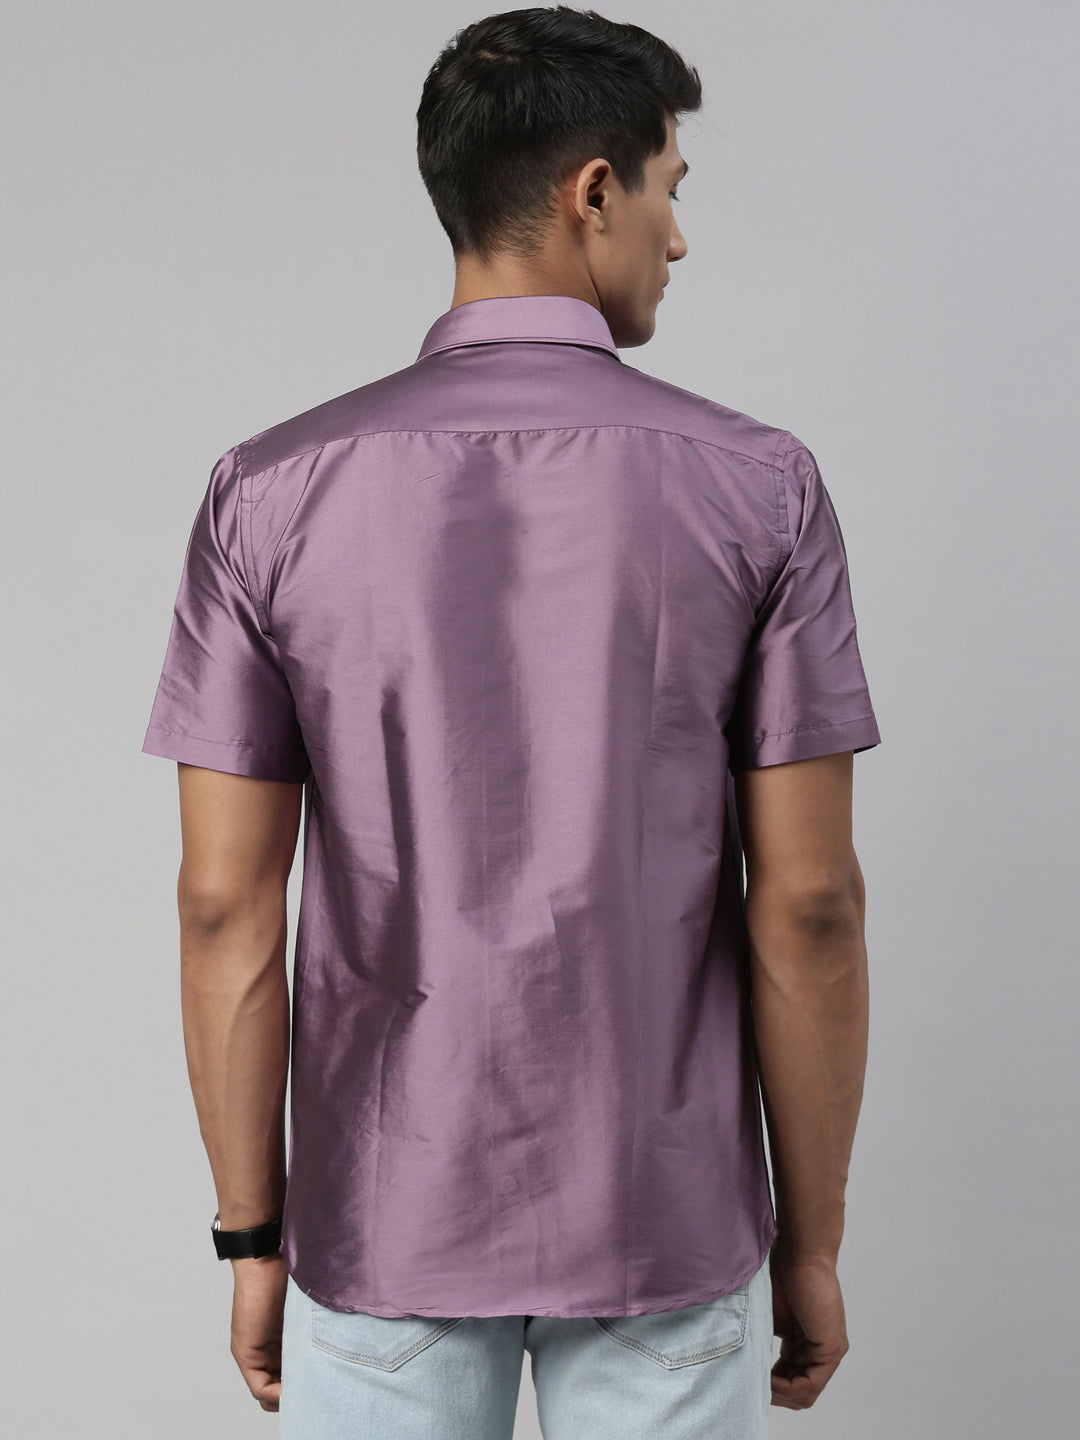 Tattva Mens Lavender Colour Half sleeve Shirt